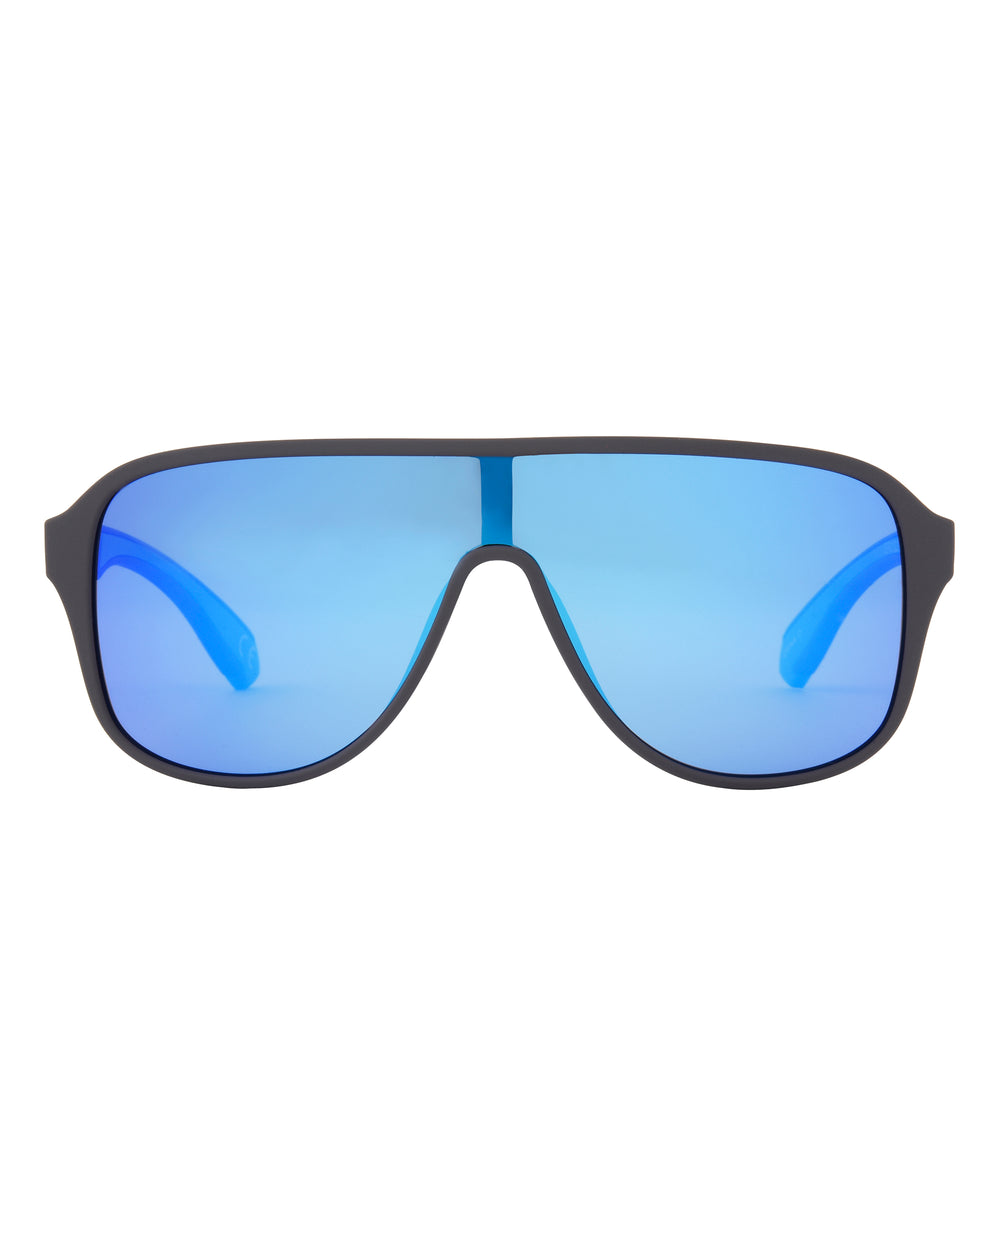 Body Glove Men's Huntington Beach Sunglasses Polarized Wrap, Matte Black  Rubberized, 61 mm